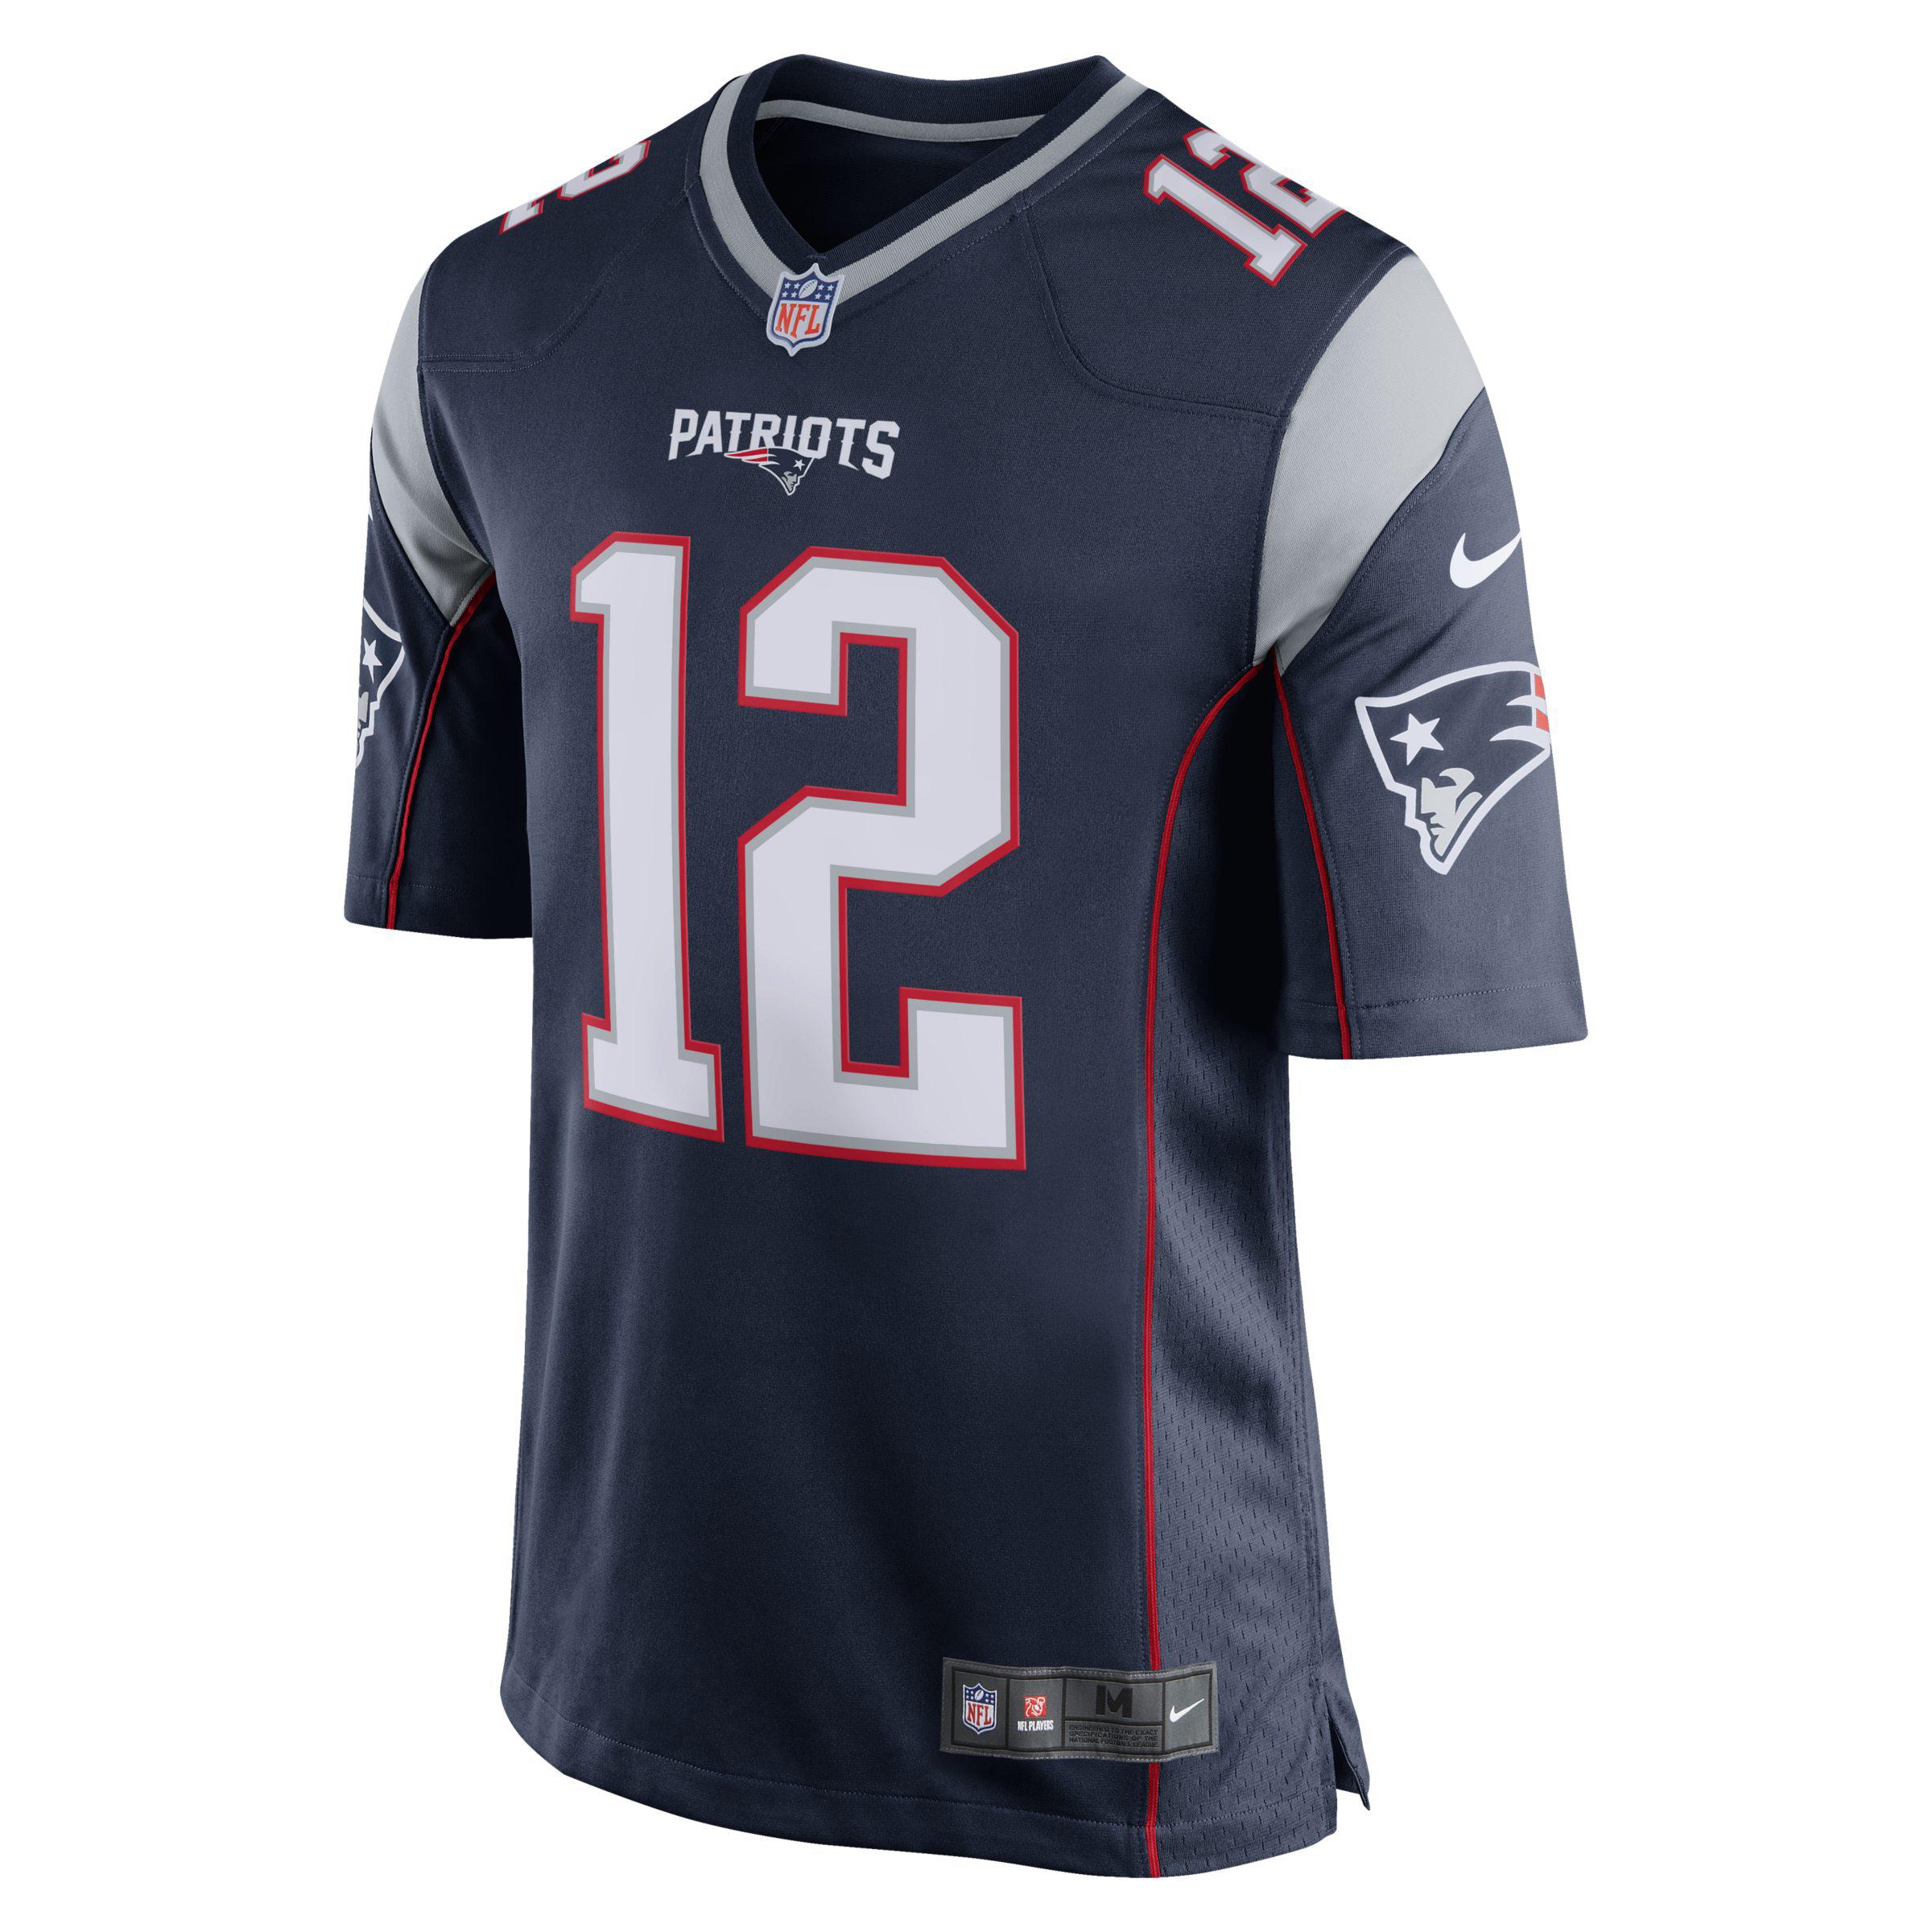 Nike Nfl New England Patriots (tom Brady) American Football Home Game